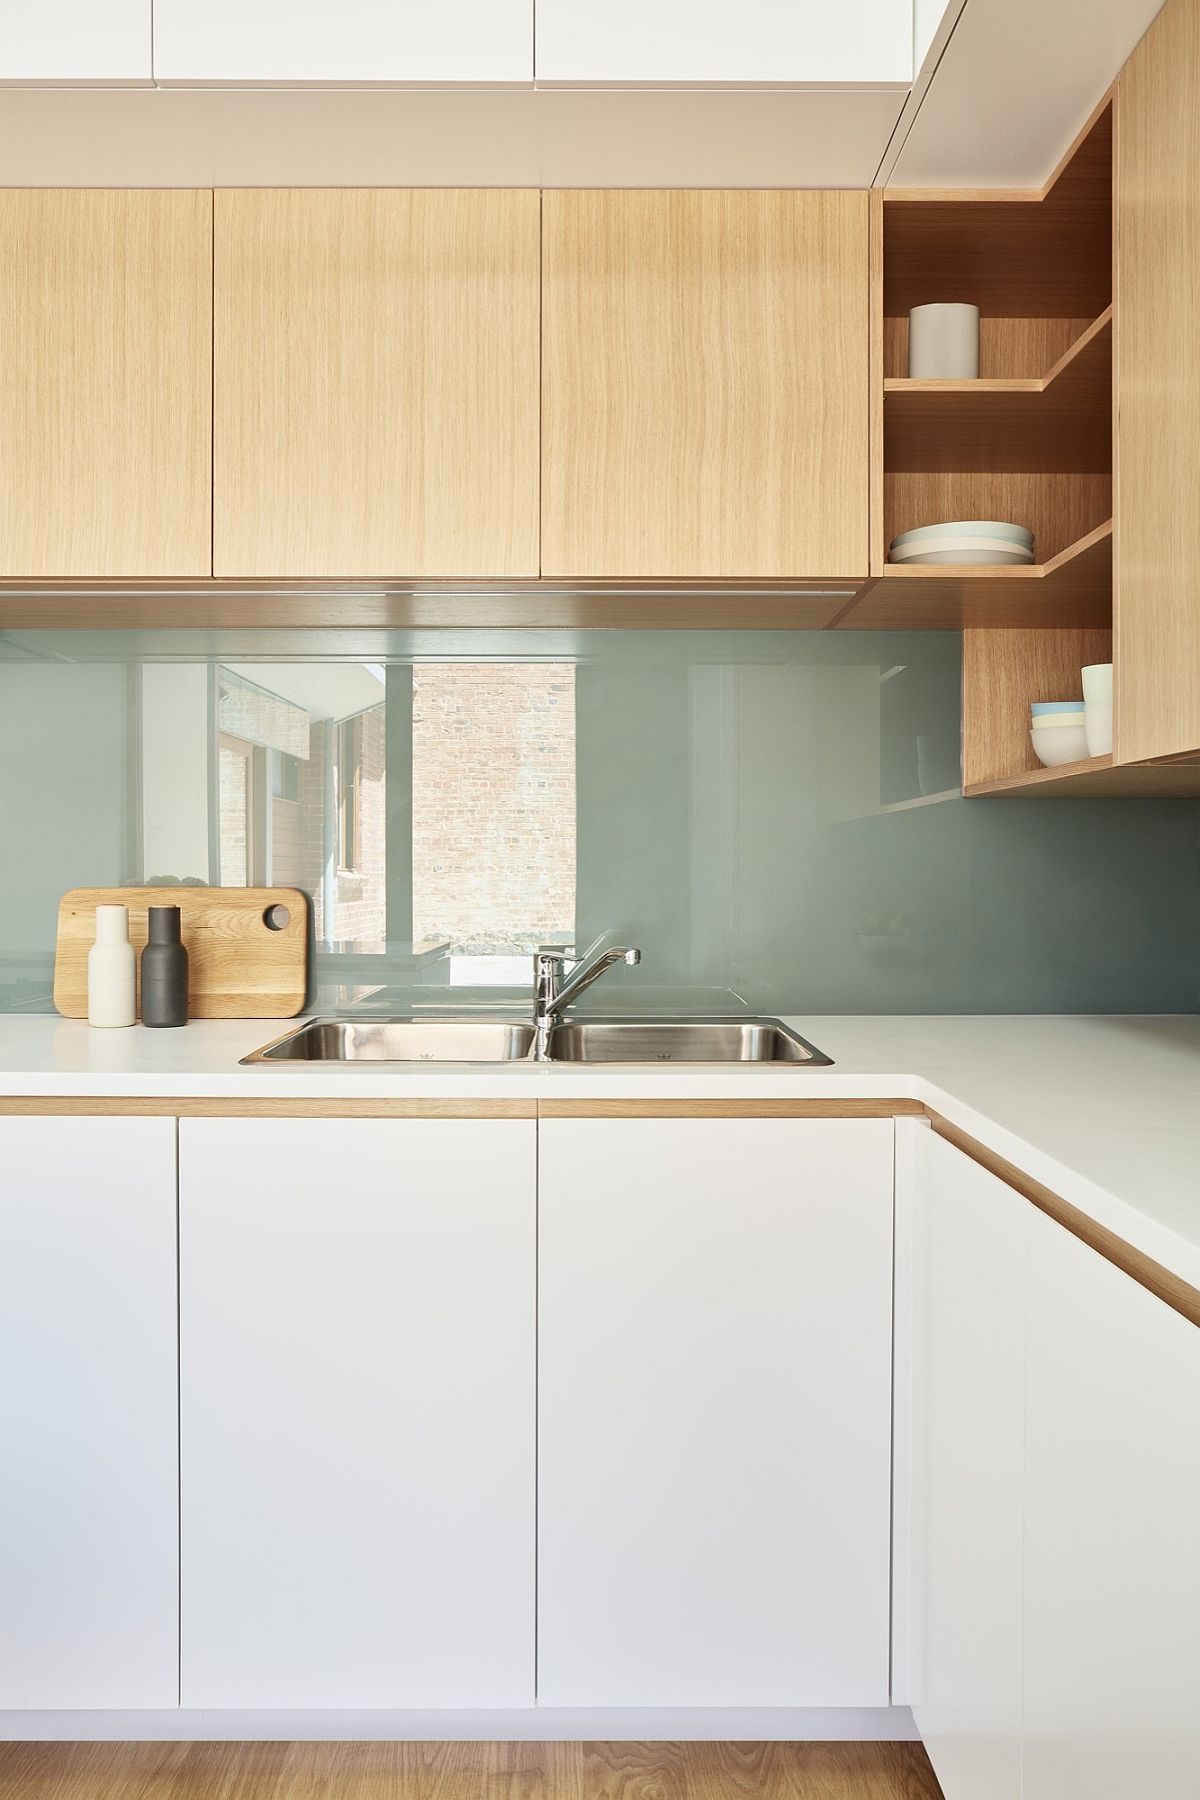 Light-filled revamped kitchen with corner shelving